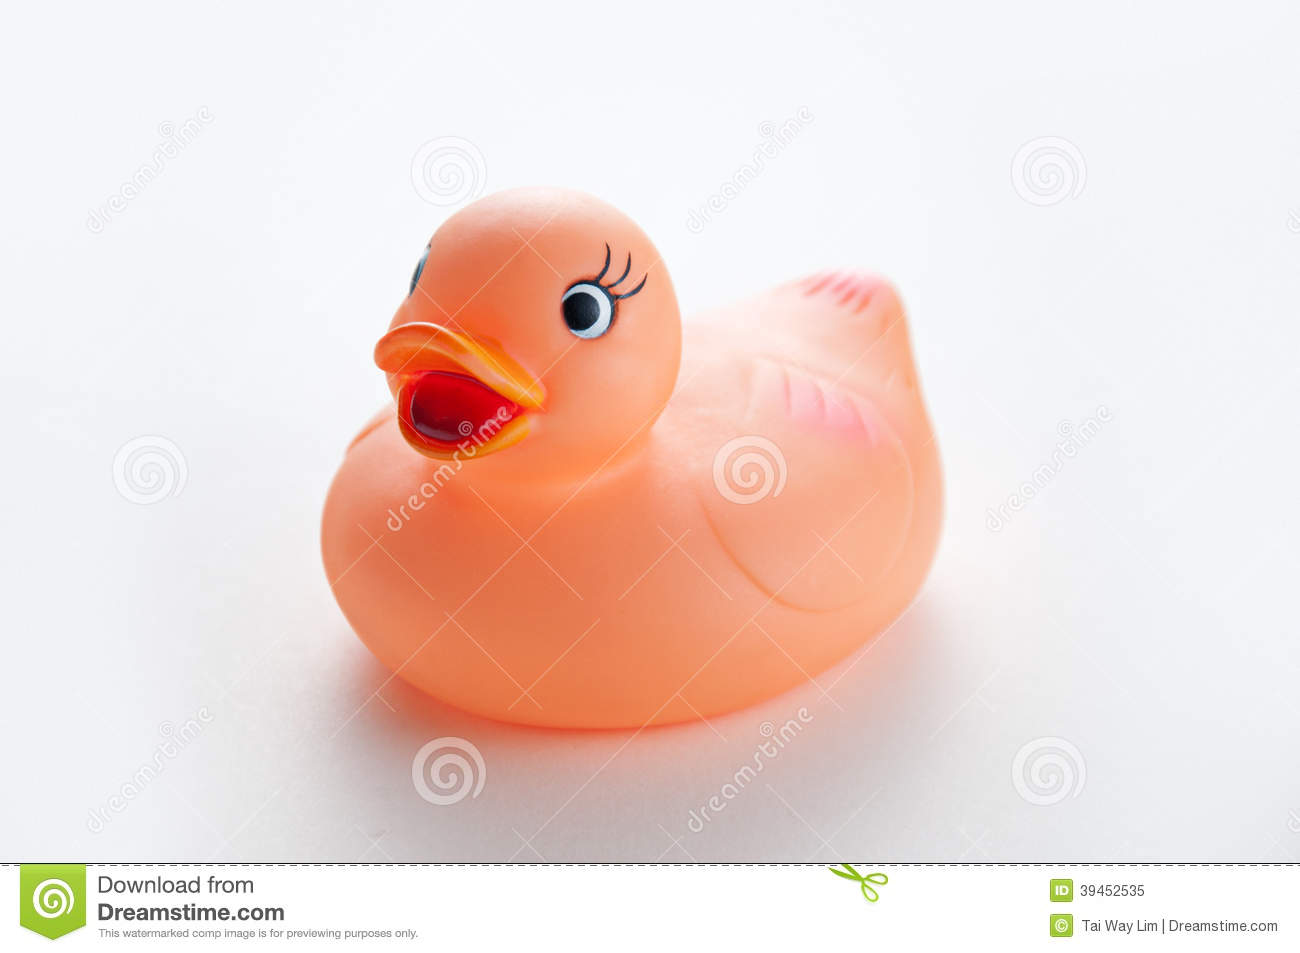 Orange Rubber Duck 2 Stock Photo   Image  39452535